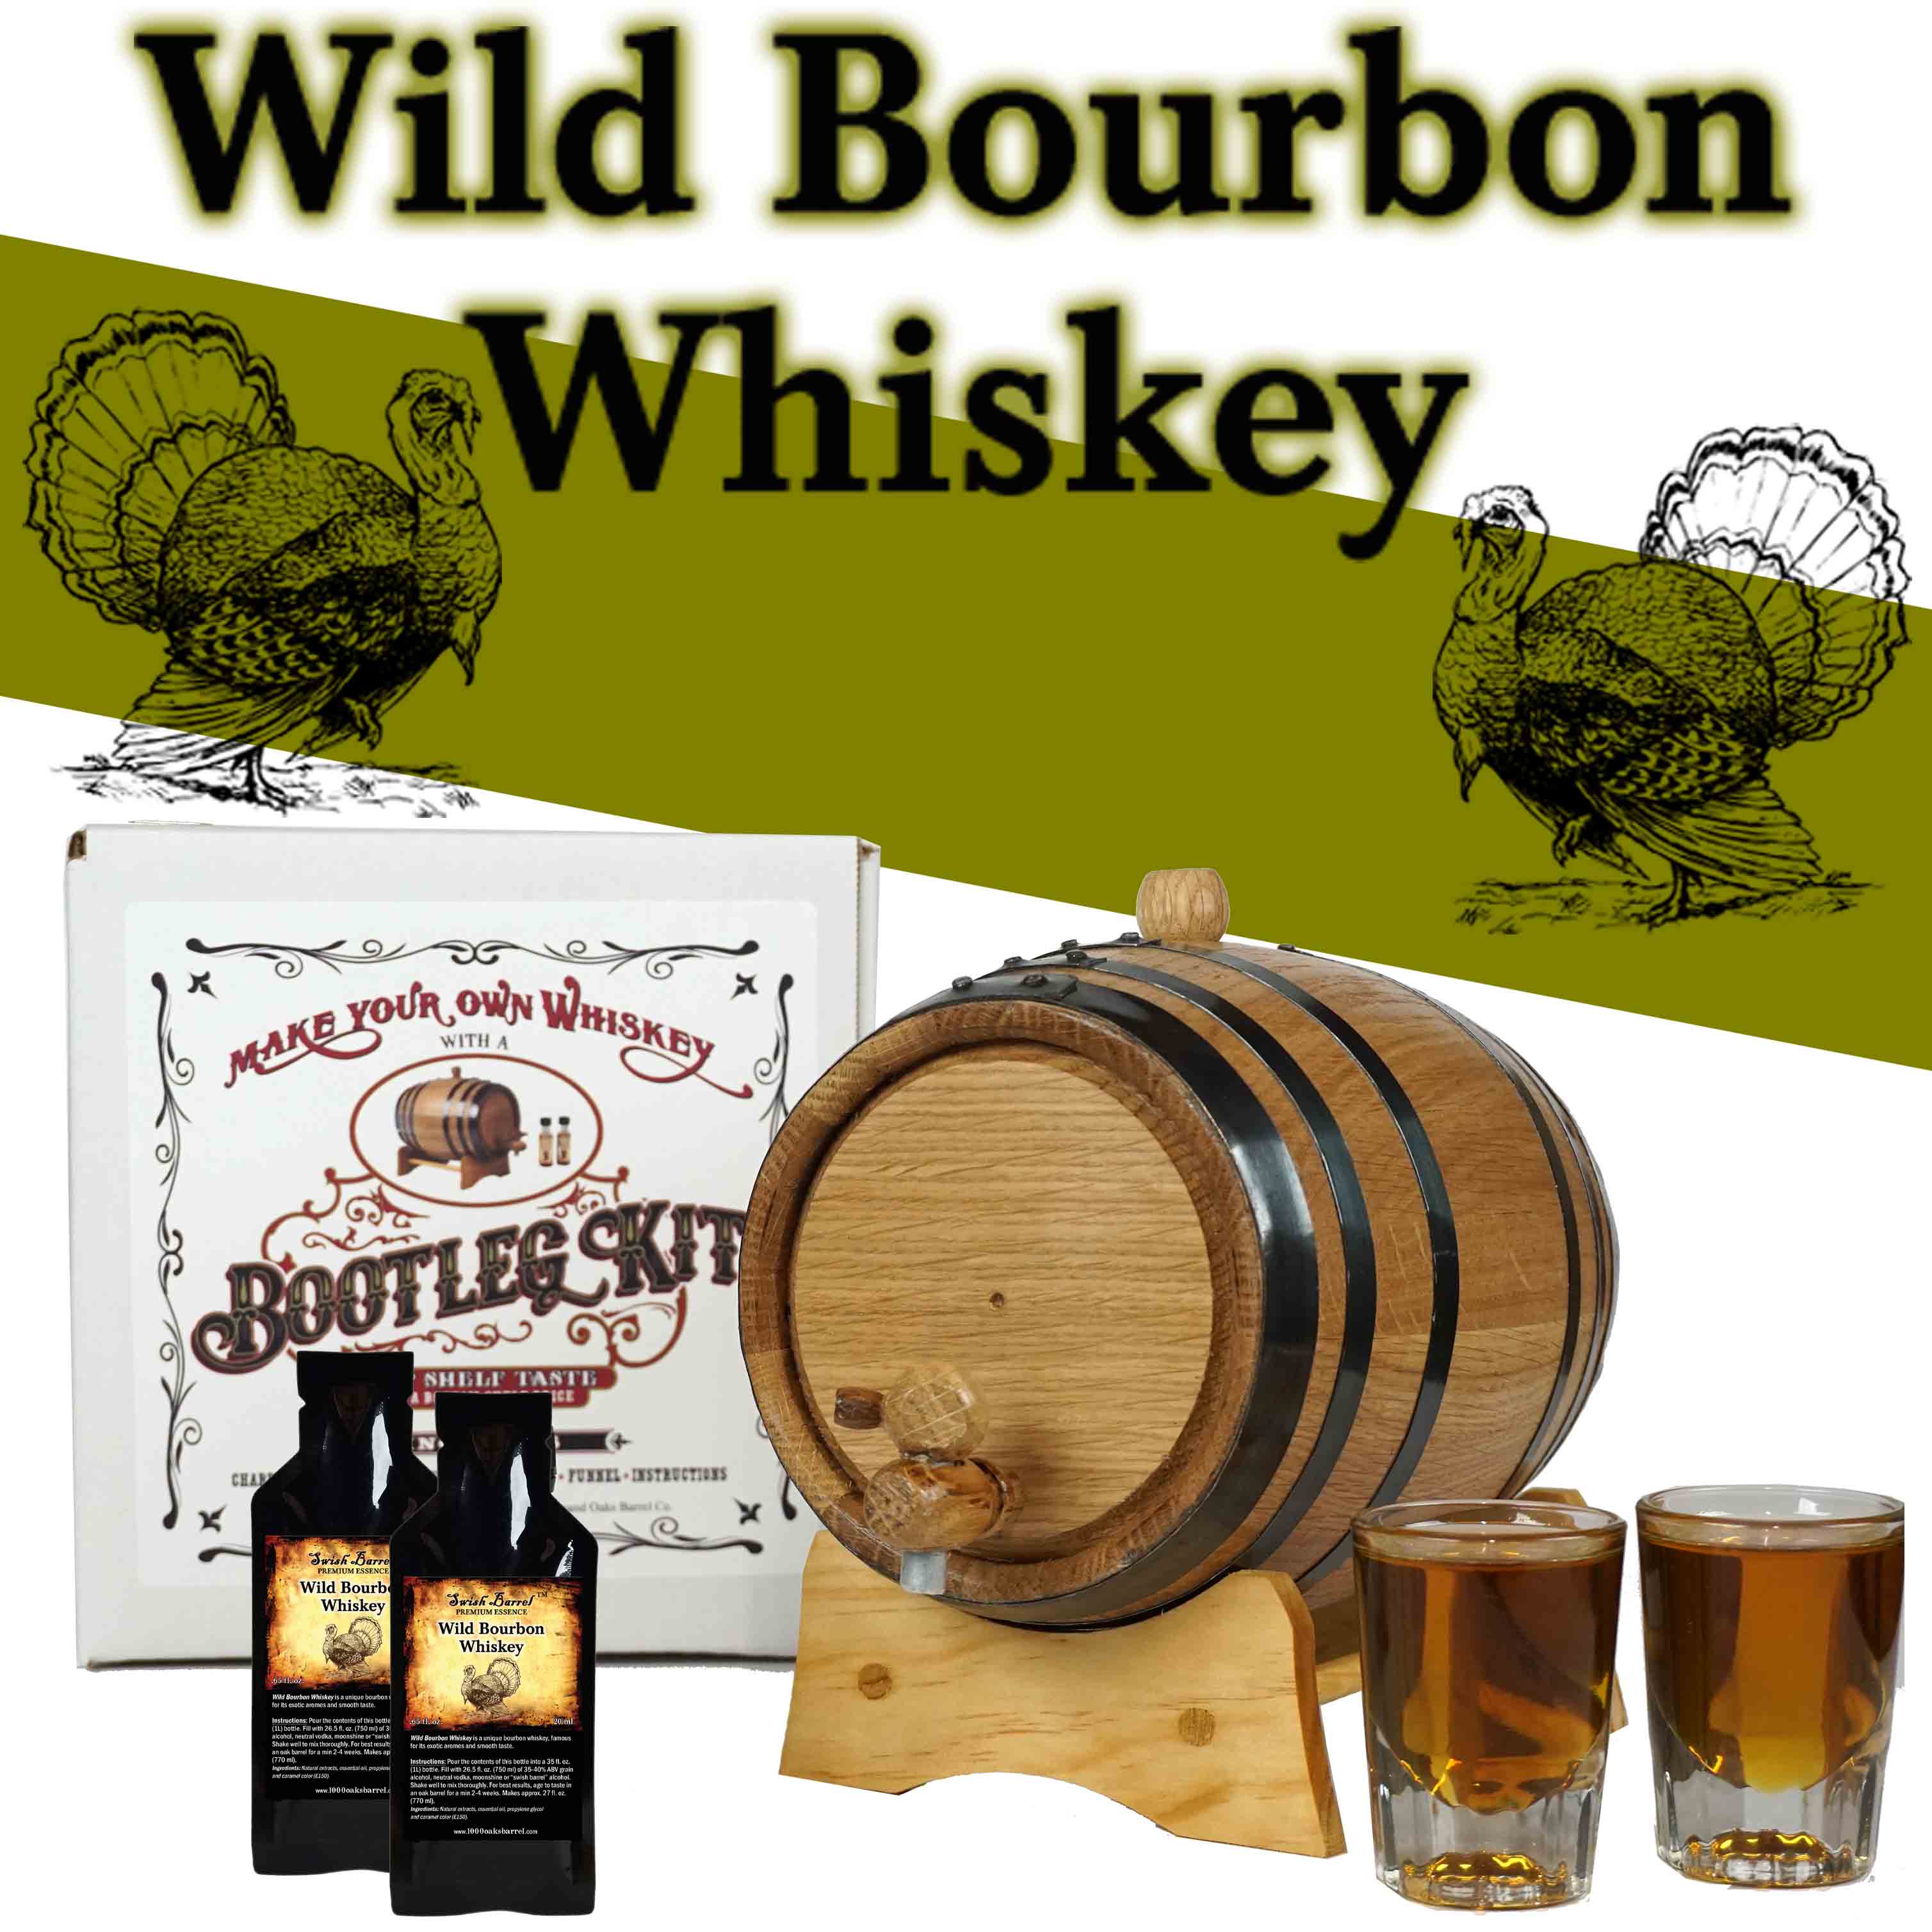 Bourbon whiskey - Ingredient